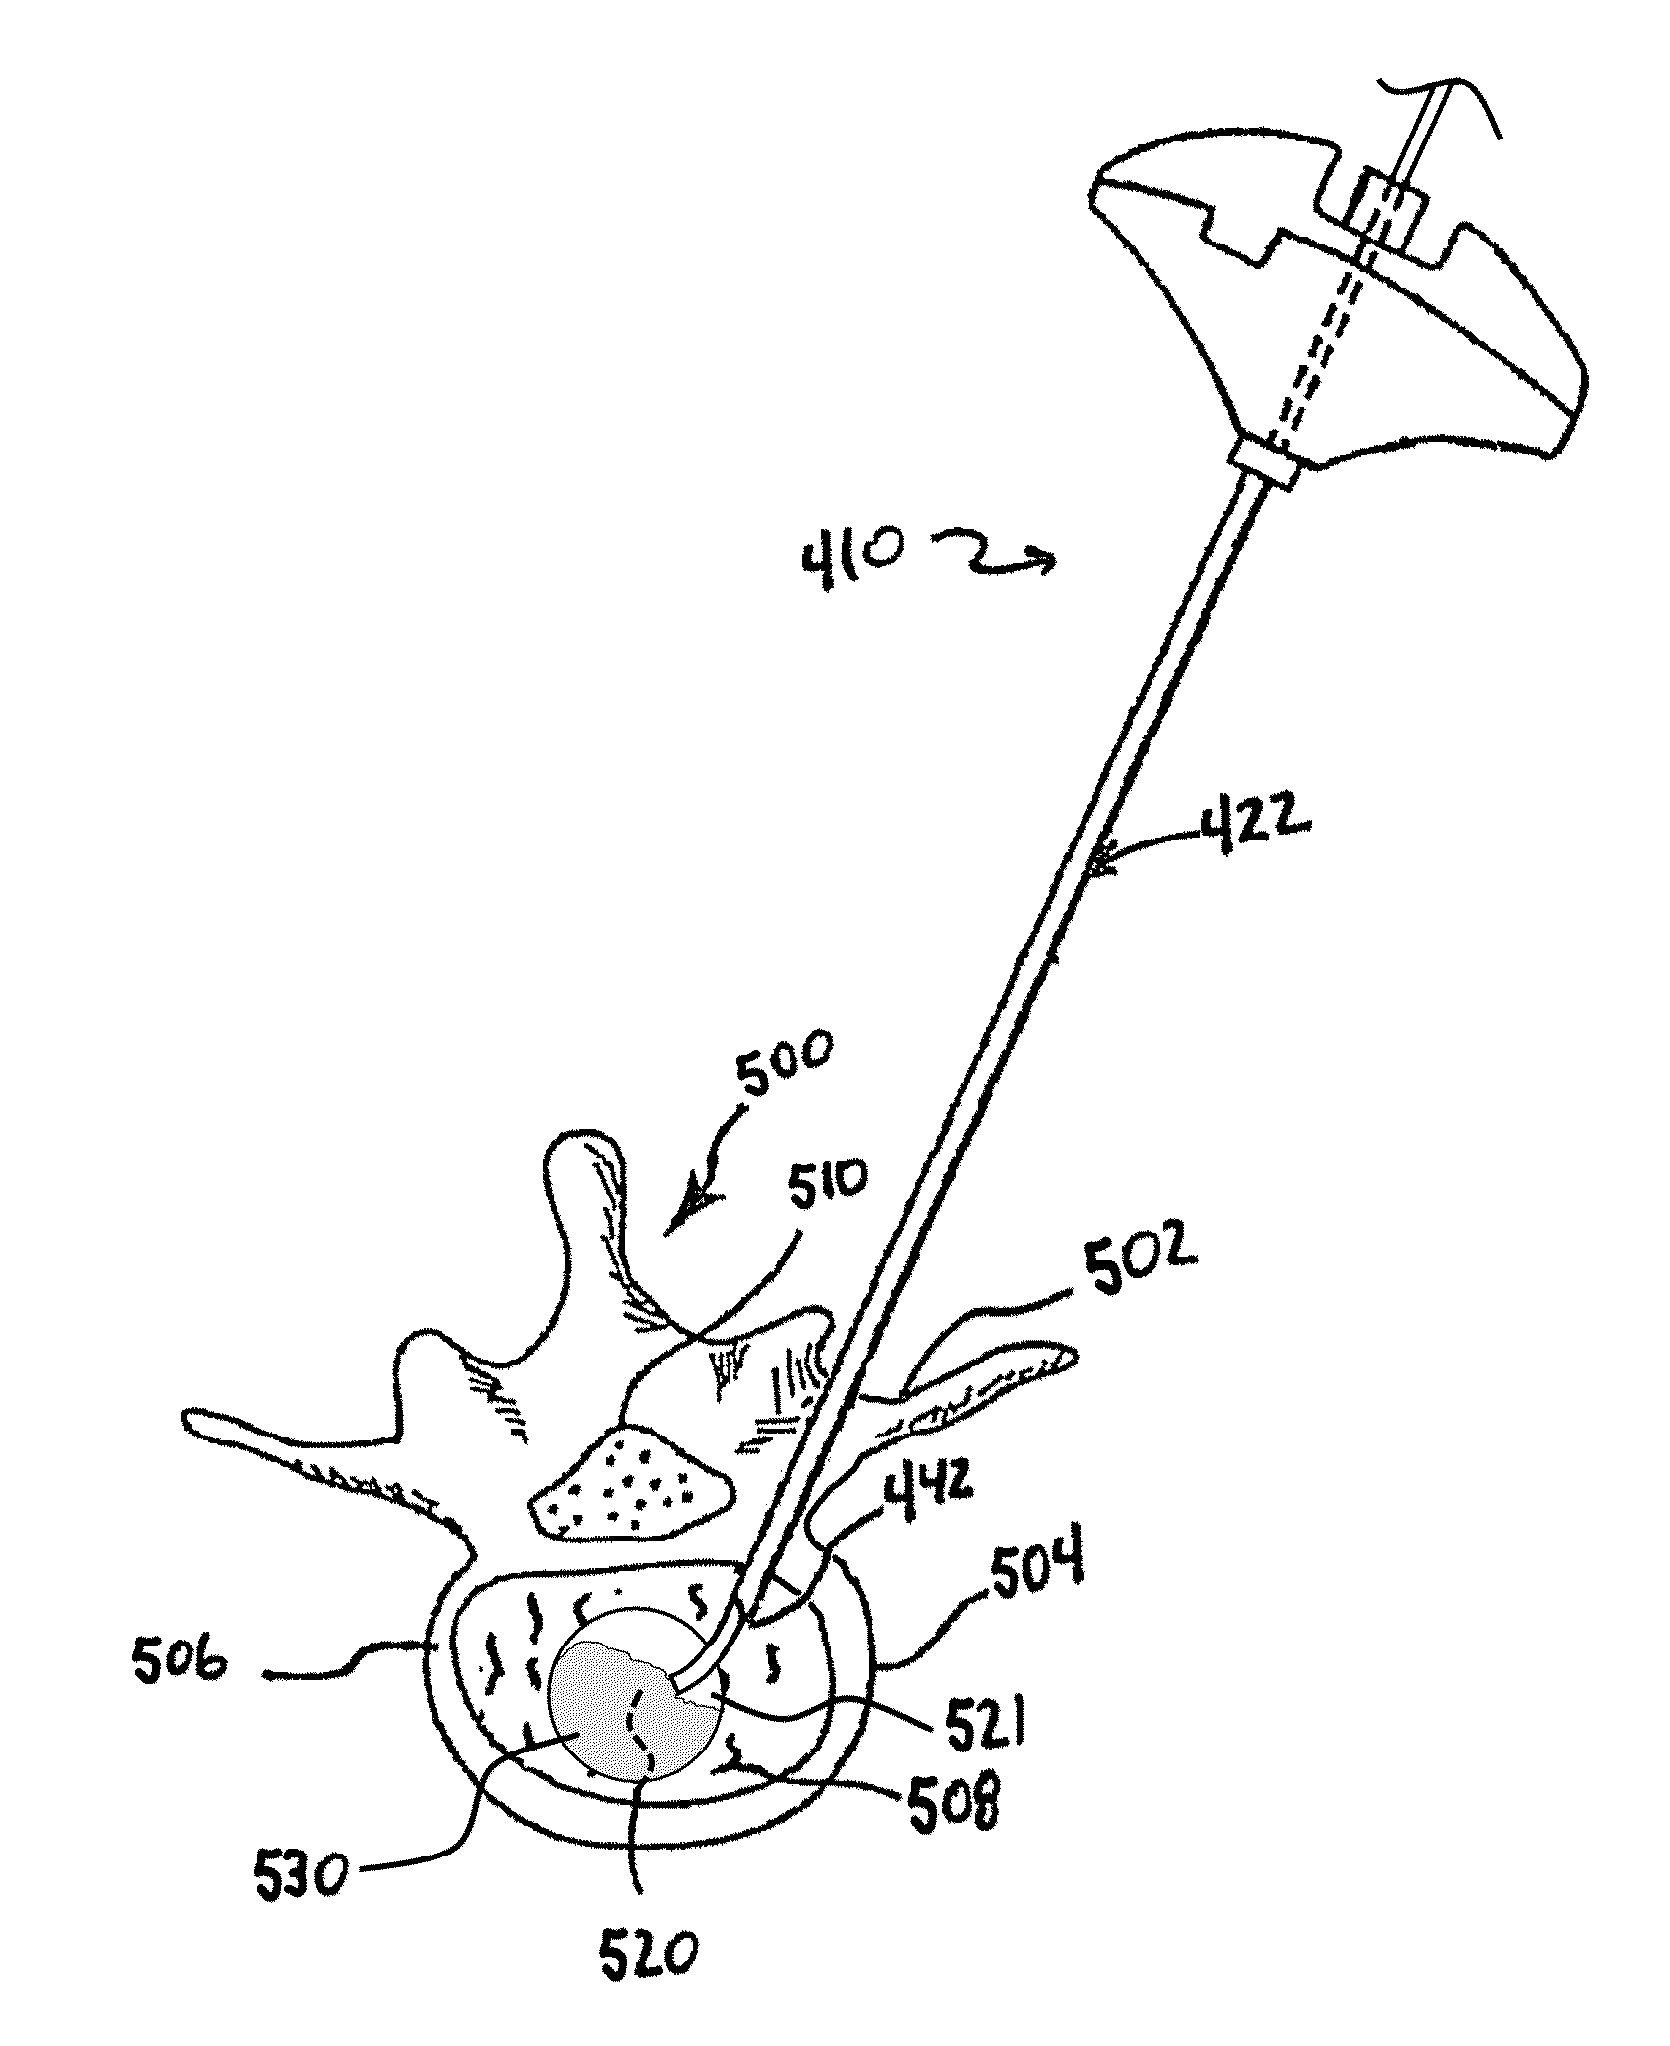 Method for balloon-aided vertebral augmentation